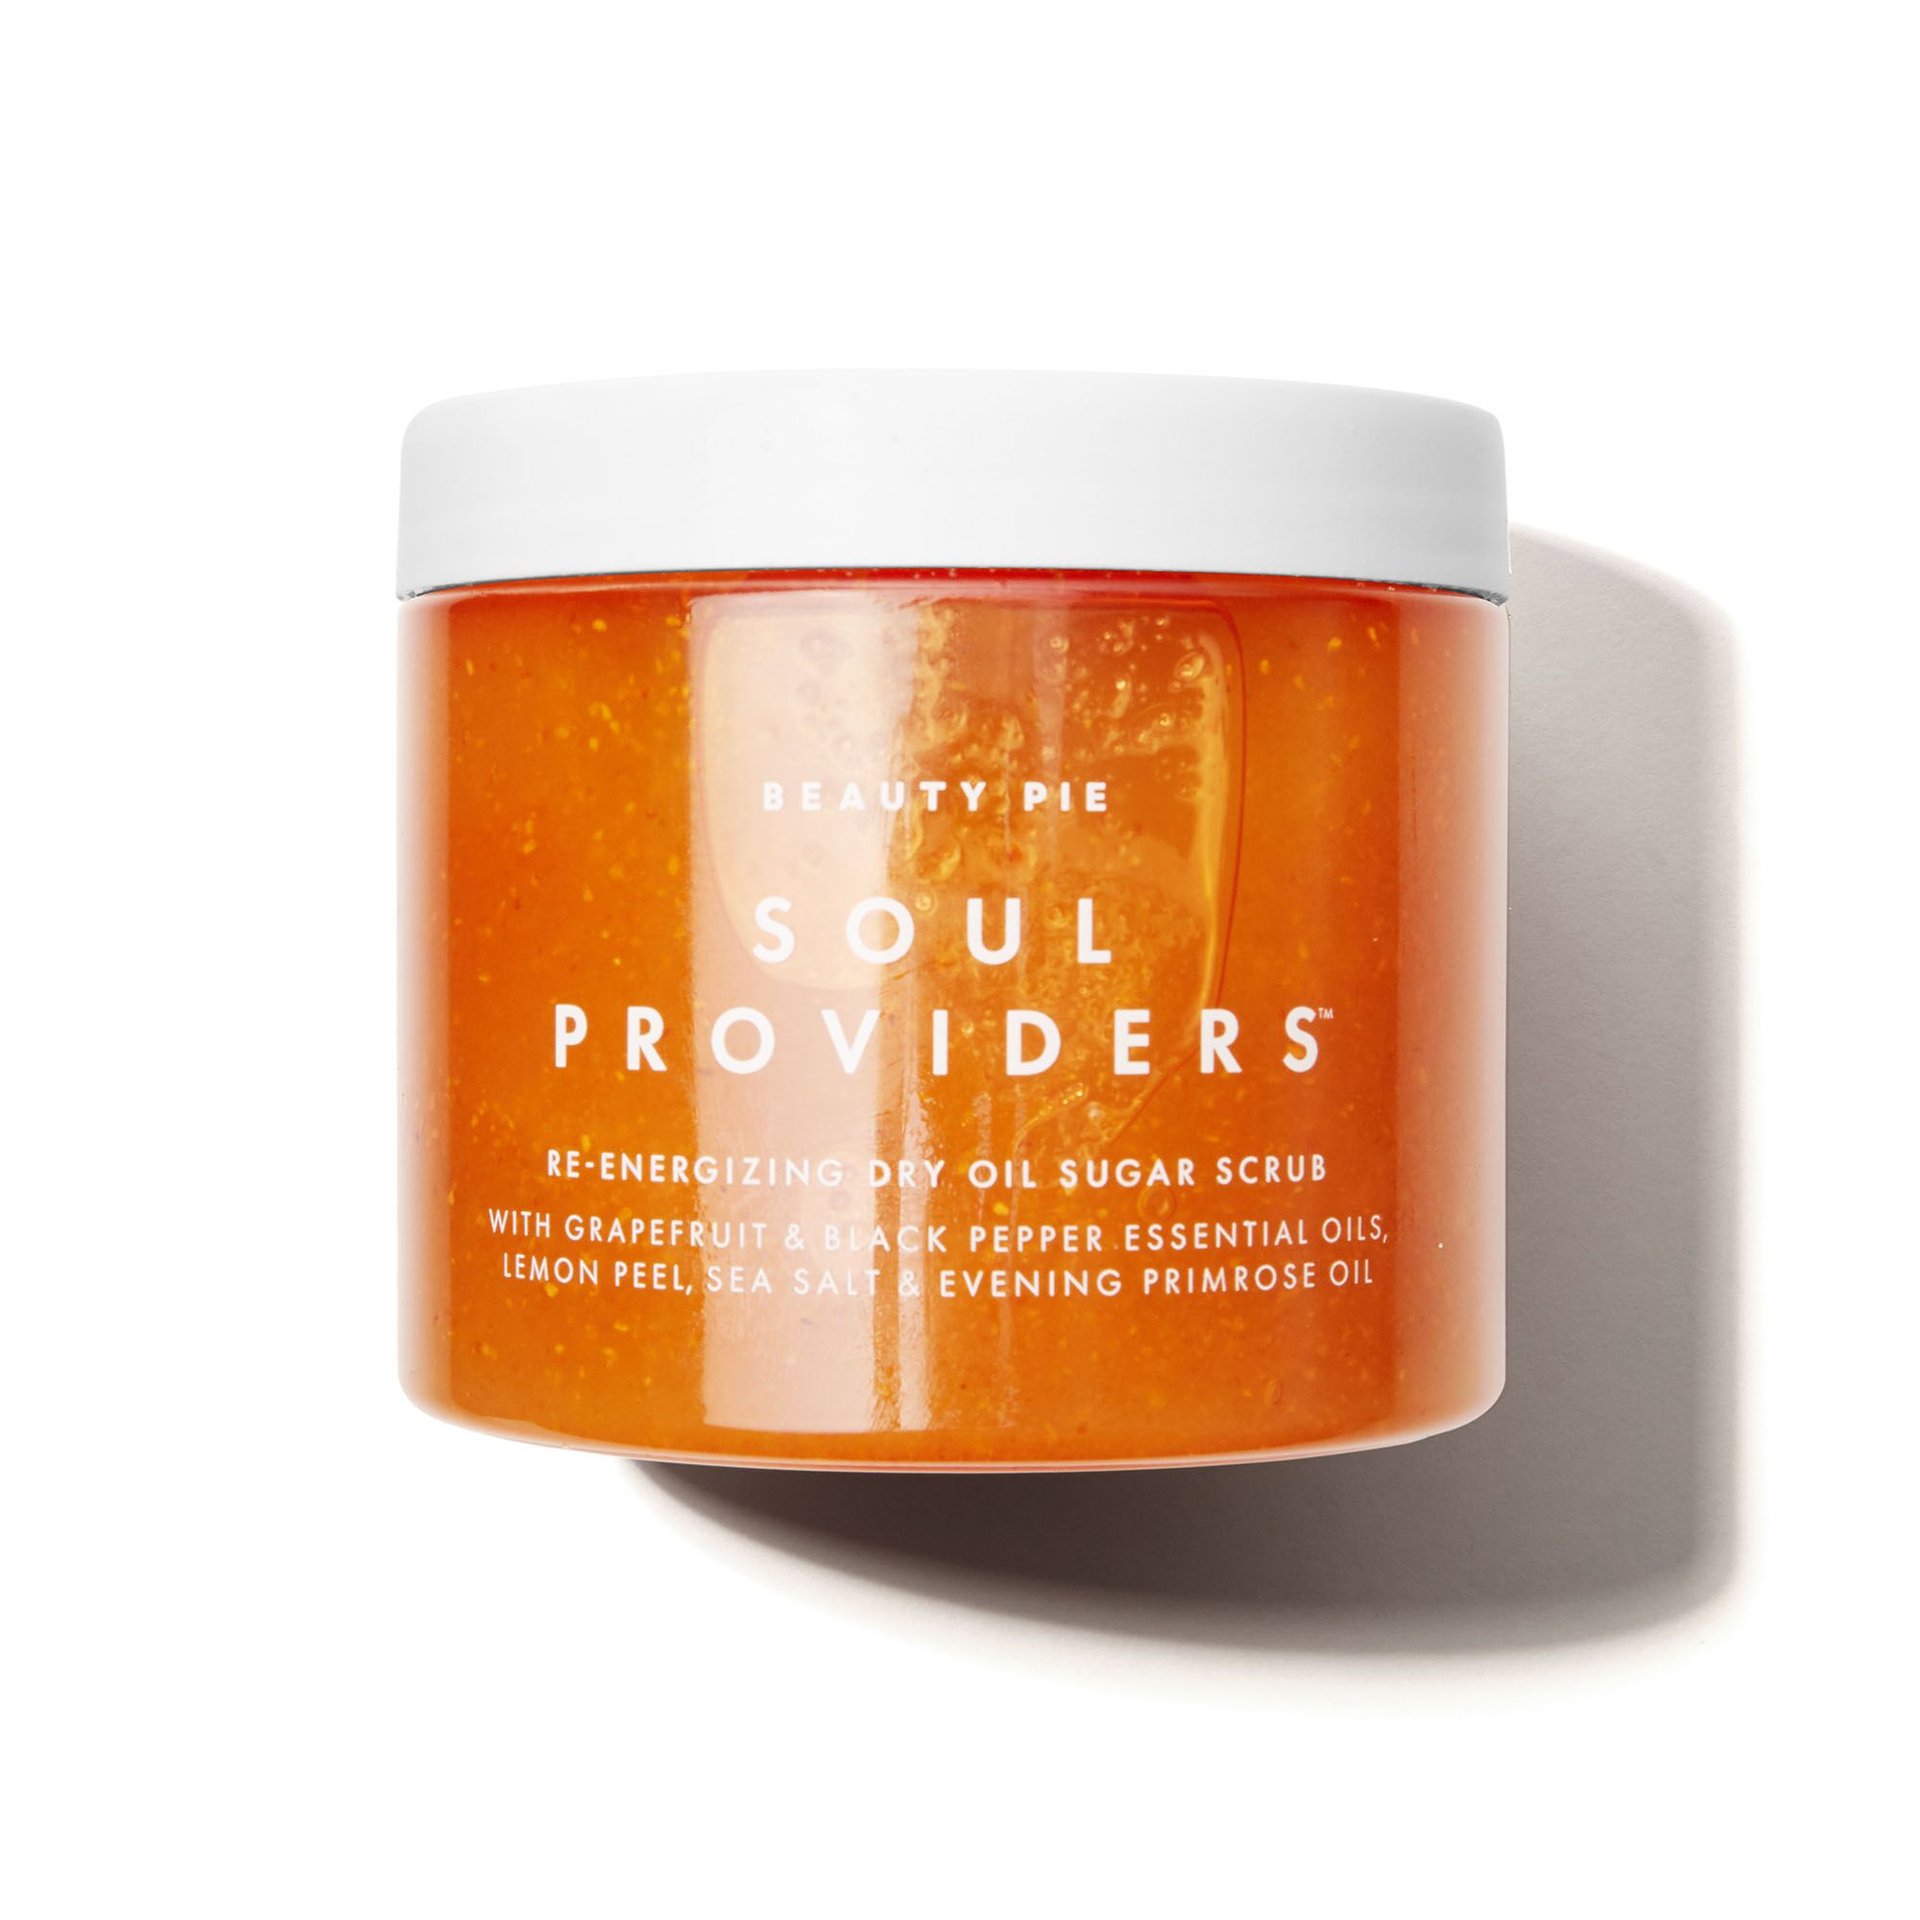 Soul providers™ re-energizing dry oil body scrub | beauty pie